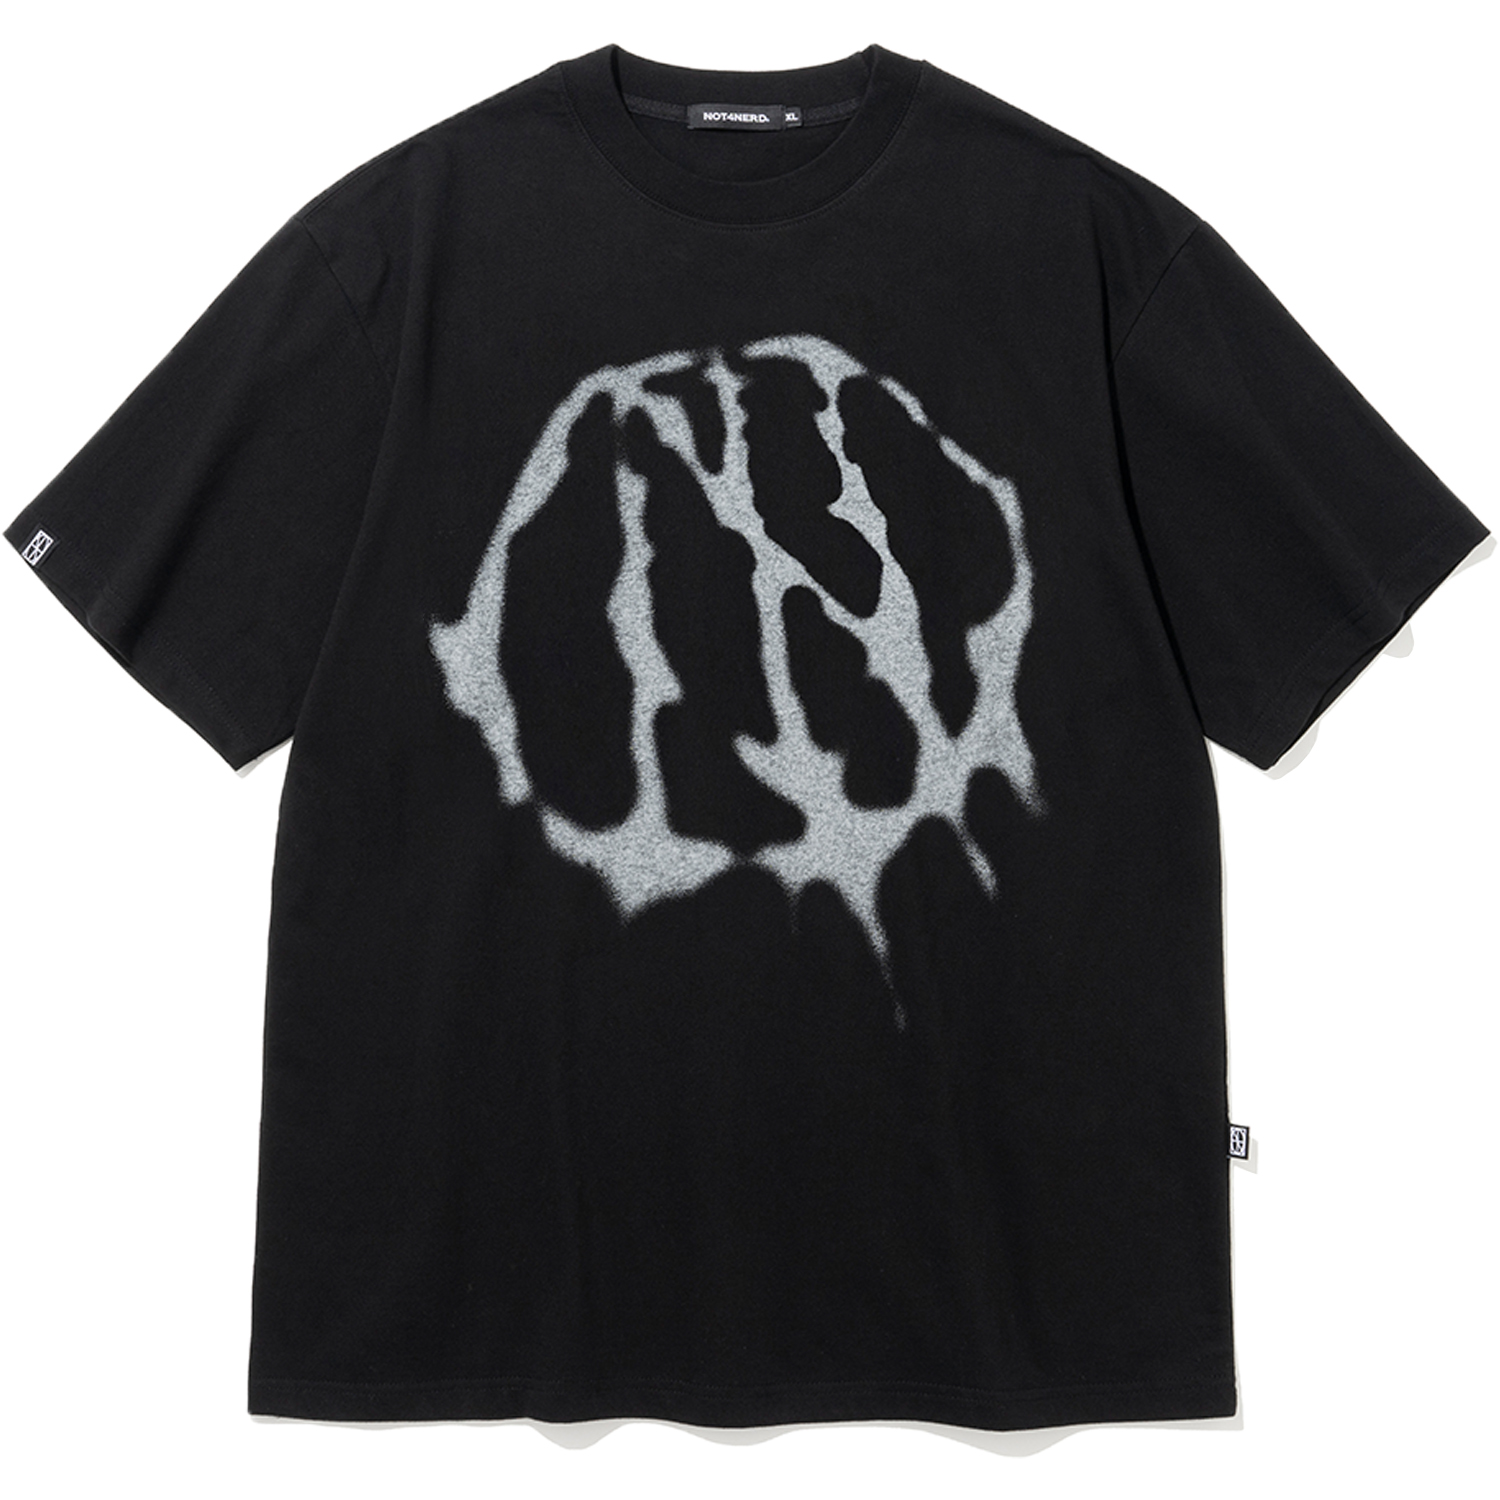 Ink Bleed T-Shirts - Black,NOT4NERD